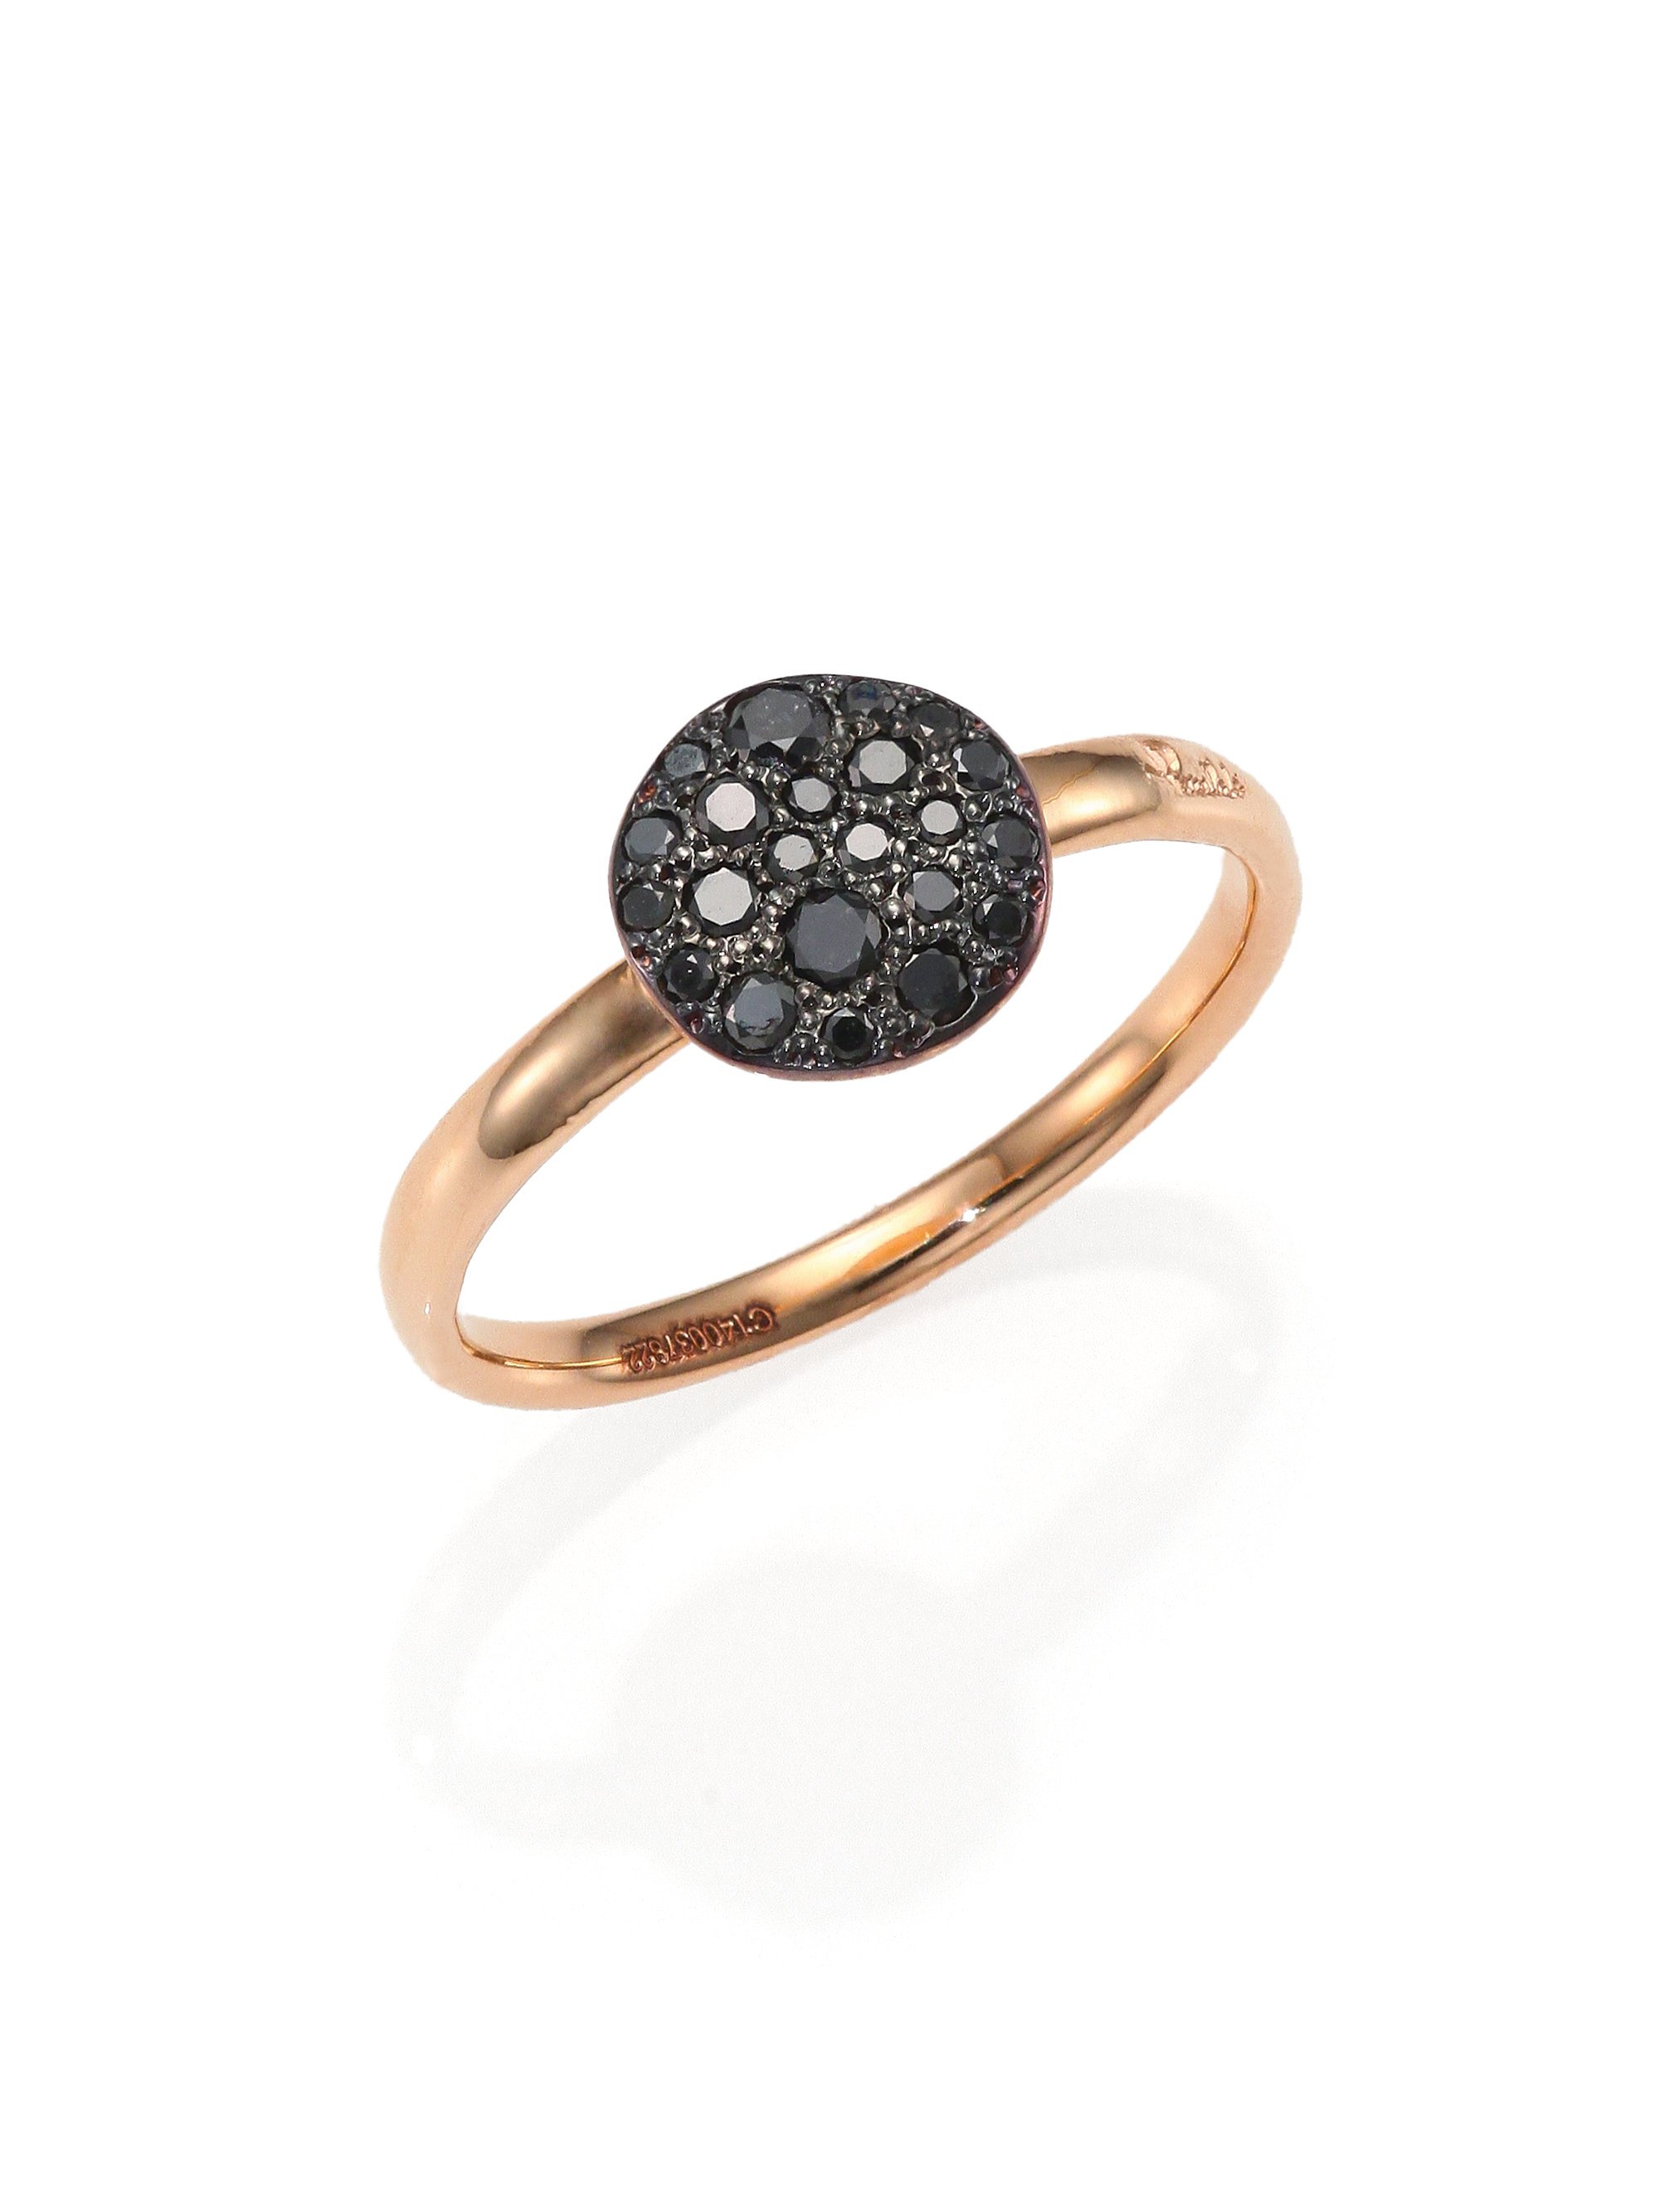 30 increíbles diseños de anillos de compromiso negros2000 x 2667